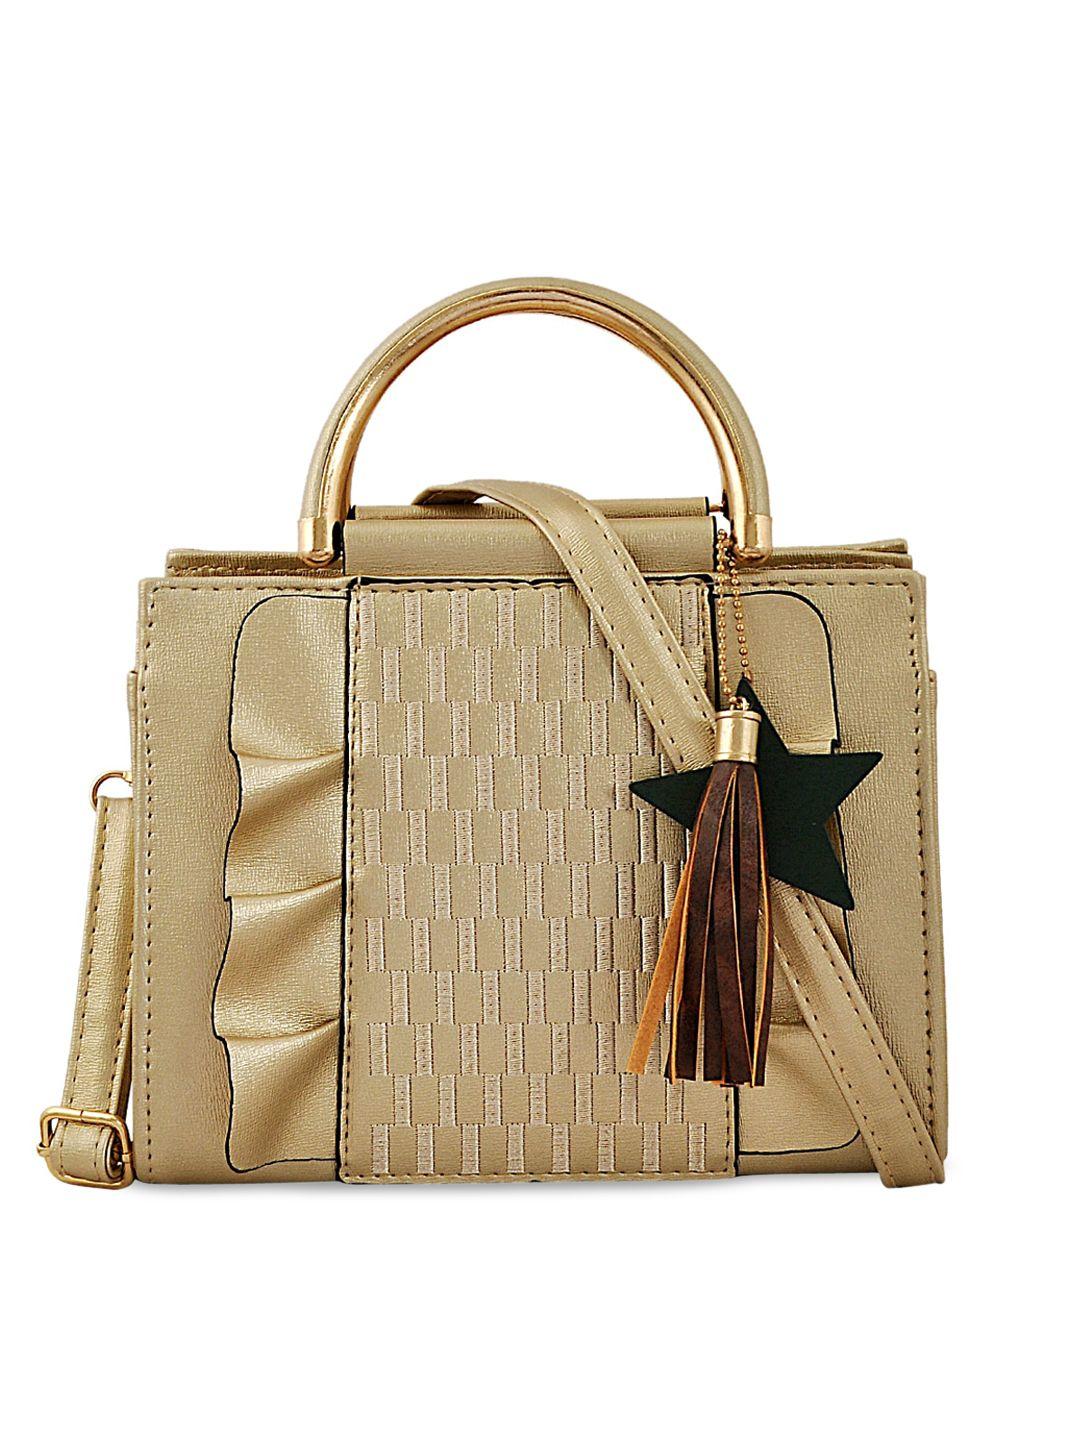 pez dorado gold-toned structured handheld bag with fringed